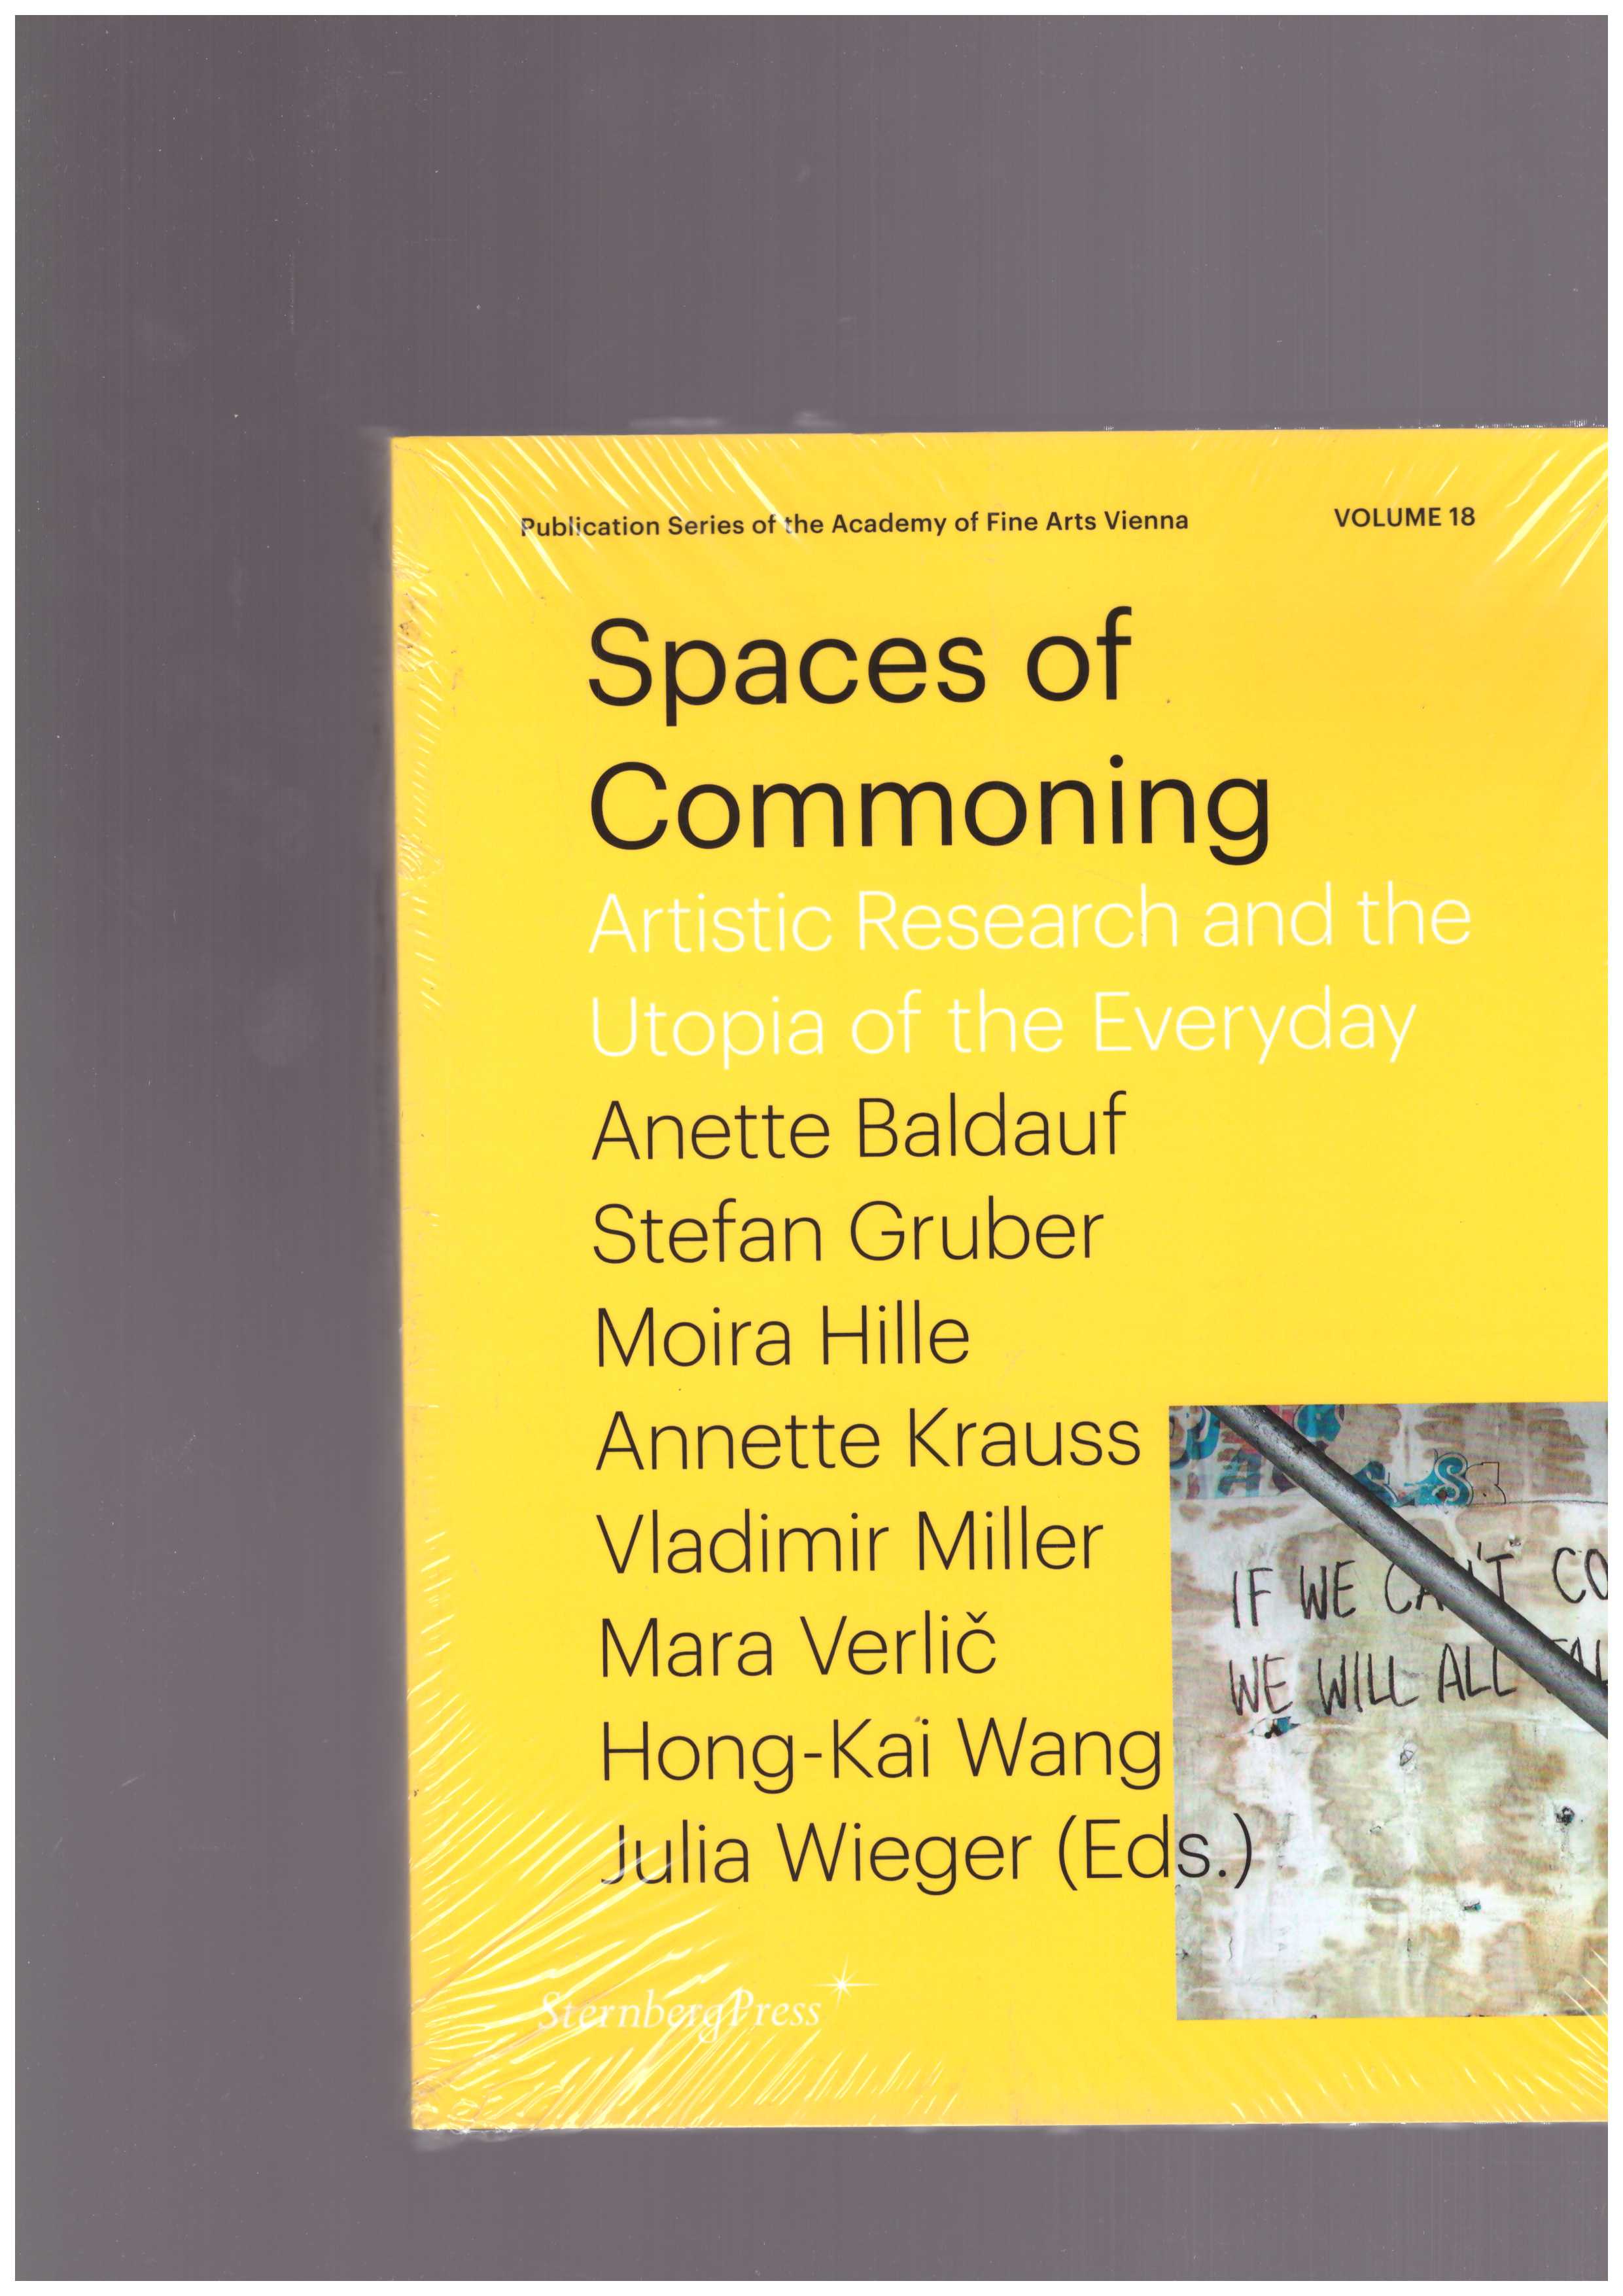 BALDAUF, Anette; GRUBER, Stefan; HILLE, Moira; KRAUSS, Annette; MILLER, Vladimir; VERLIČ, Mara; WANG, Hong-Kai; WIEGER, Julia (eds.) - Spaces of Commoning